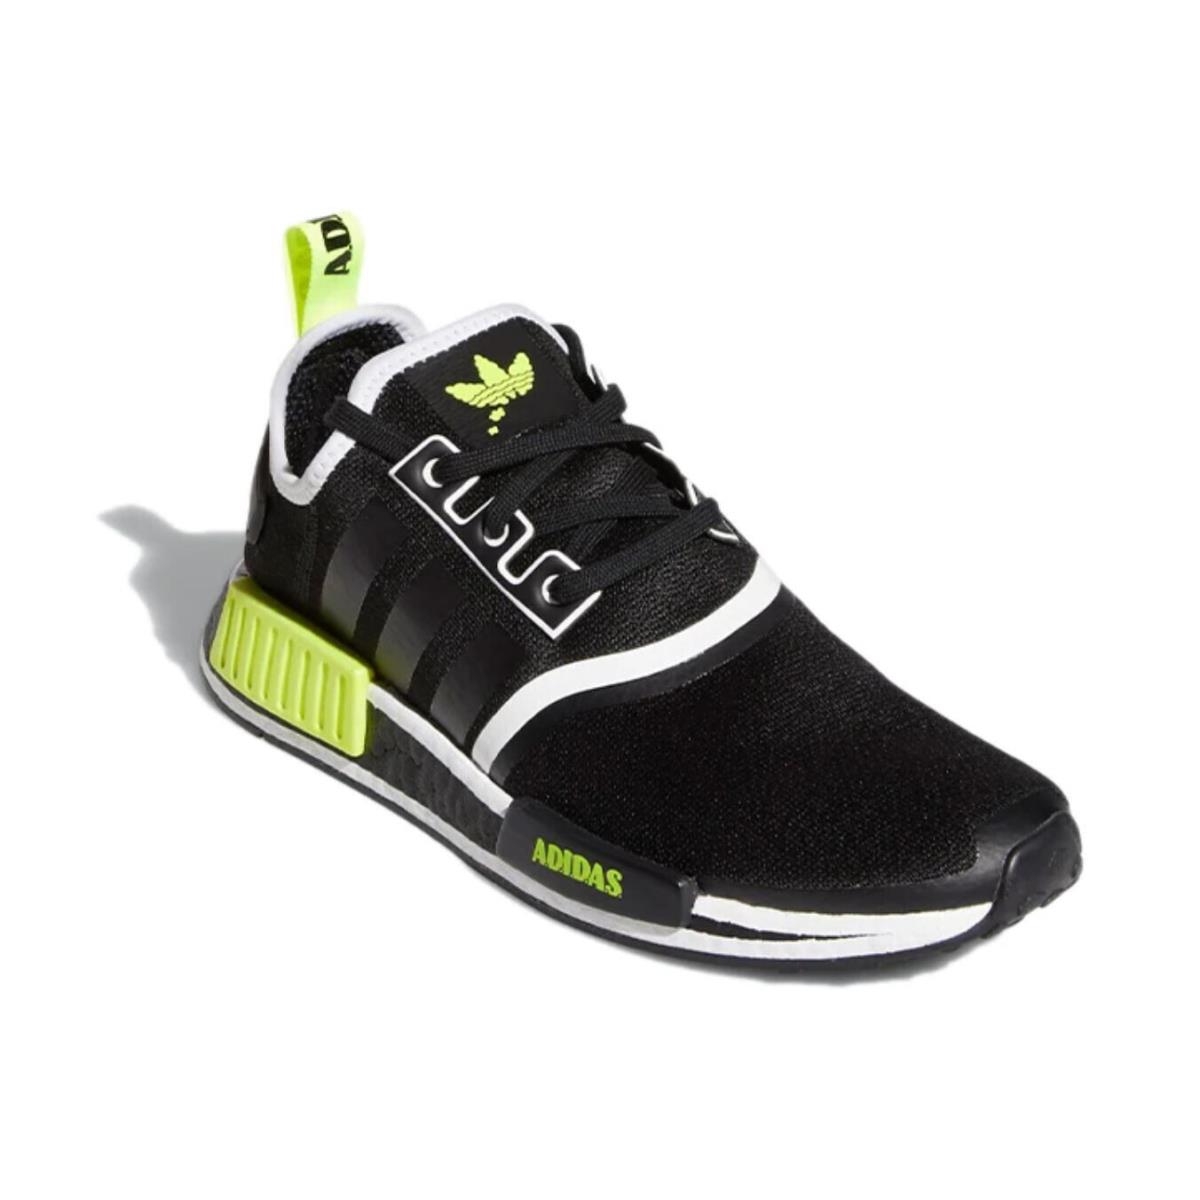 Mens Adidas Originals Nmd R1 Runner Running Shoes Size US 10.5 GV7183